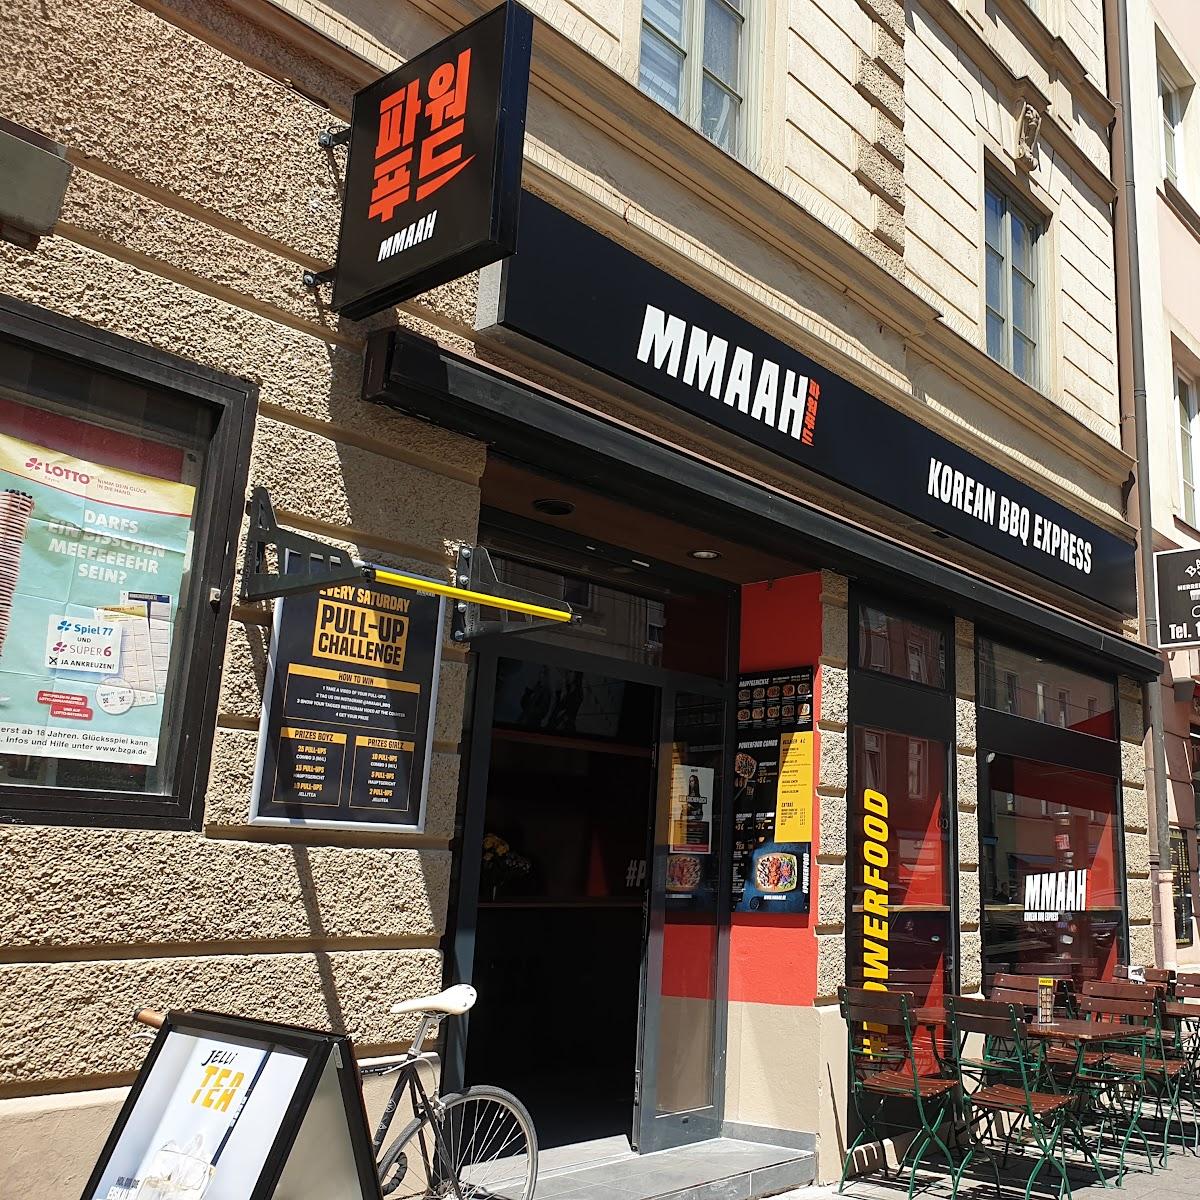 Mmaah - Korean BBQ Express 🍽️ Speisekarte München